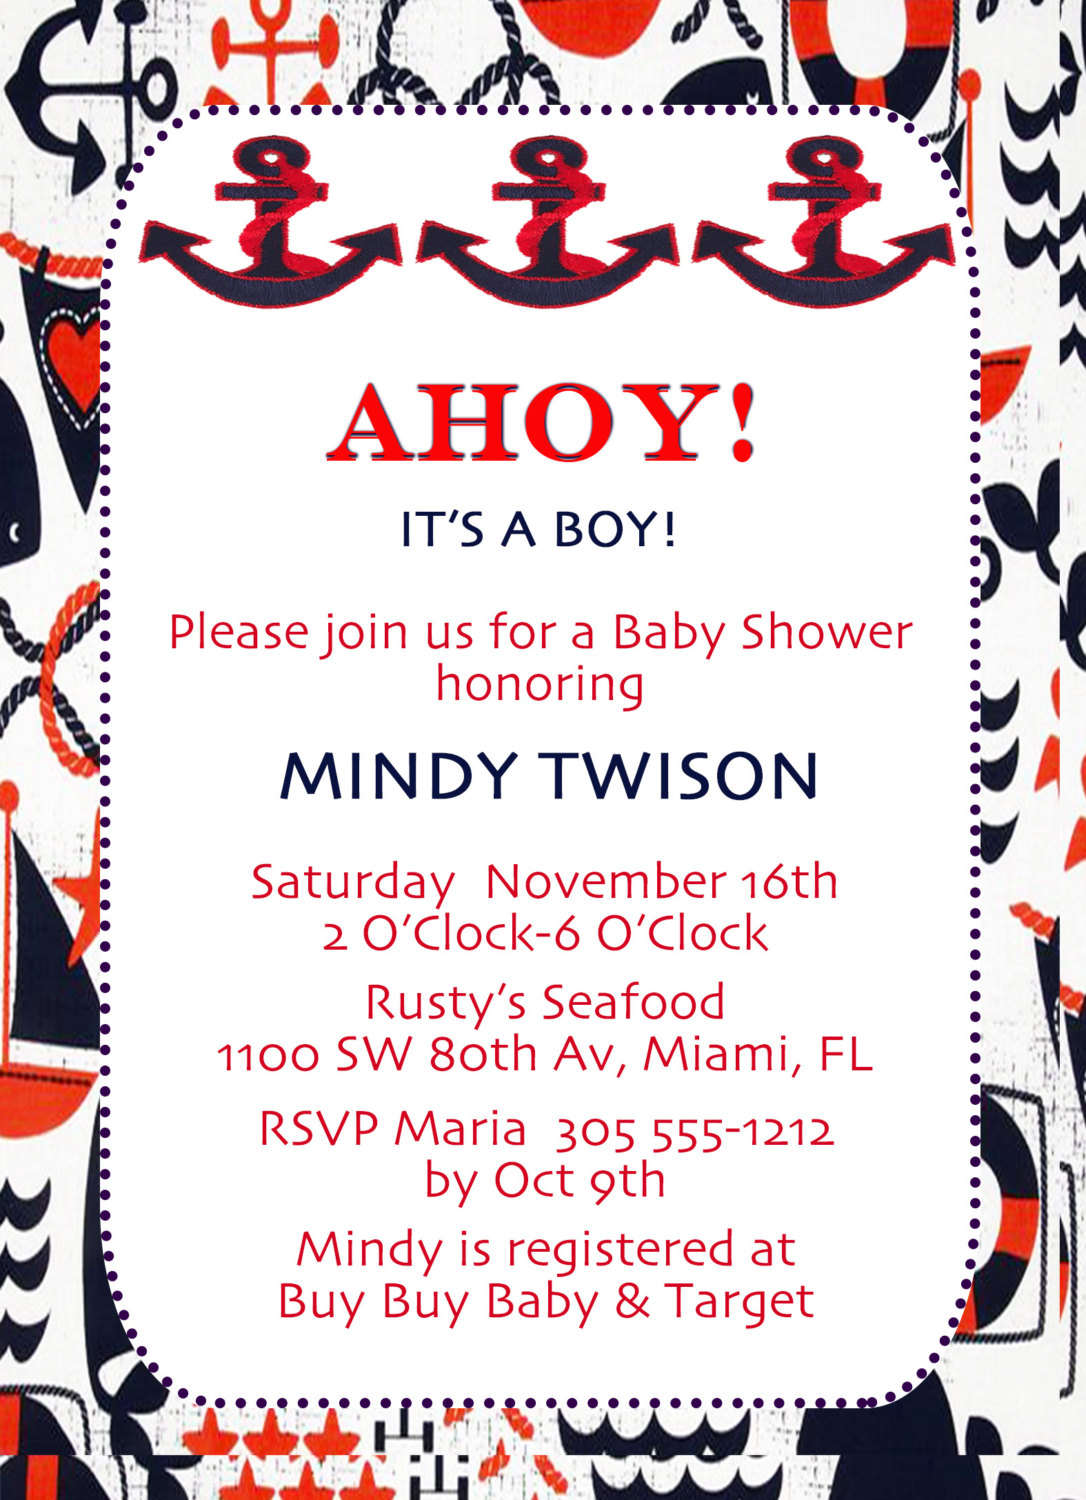 Baby Shower Invite - Ahoy! Ahoy! 5 X 7 -1 Sided